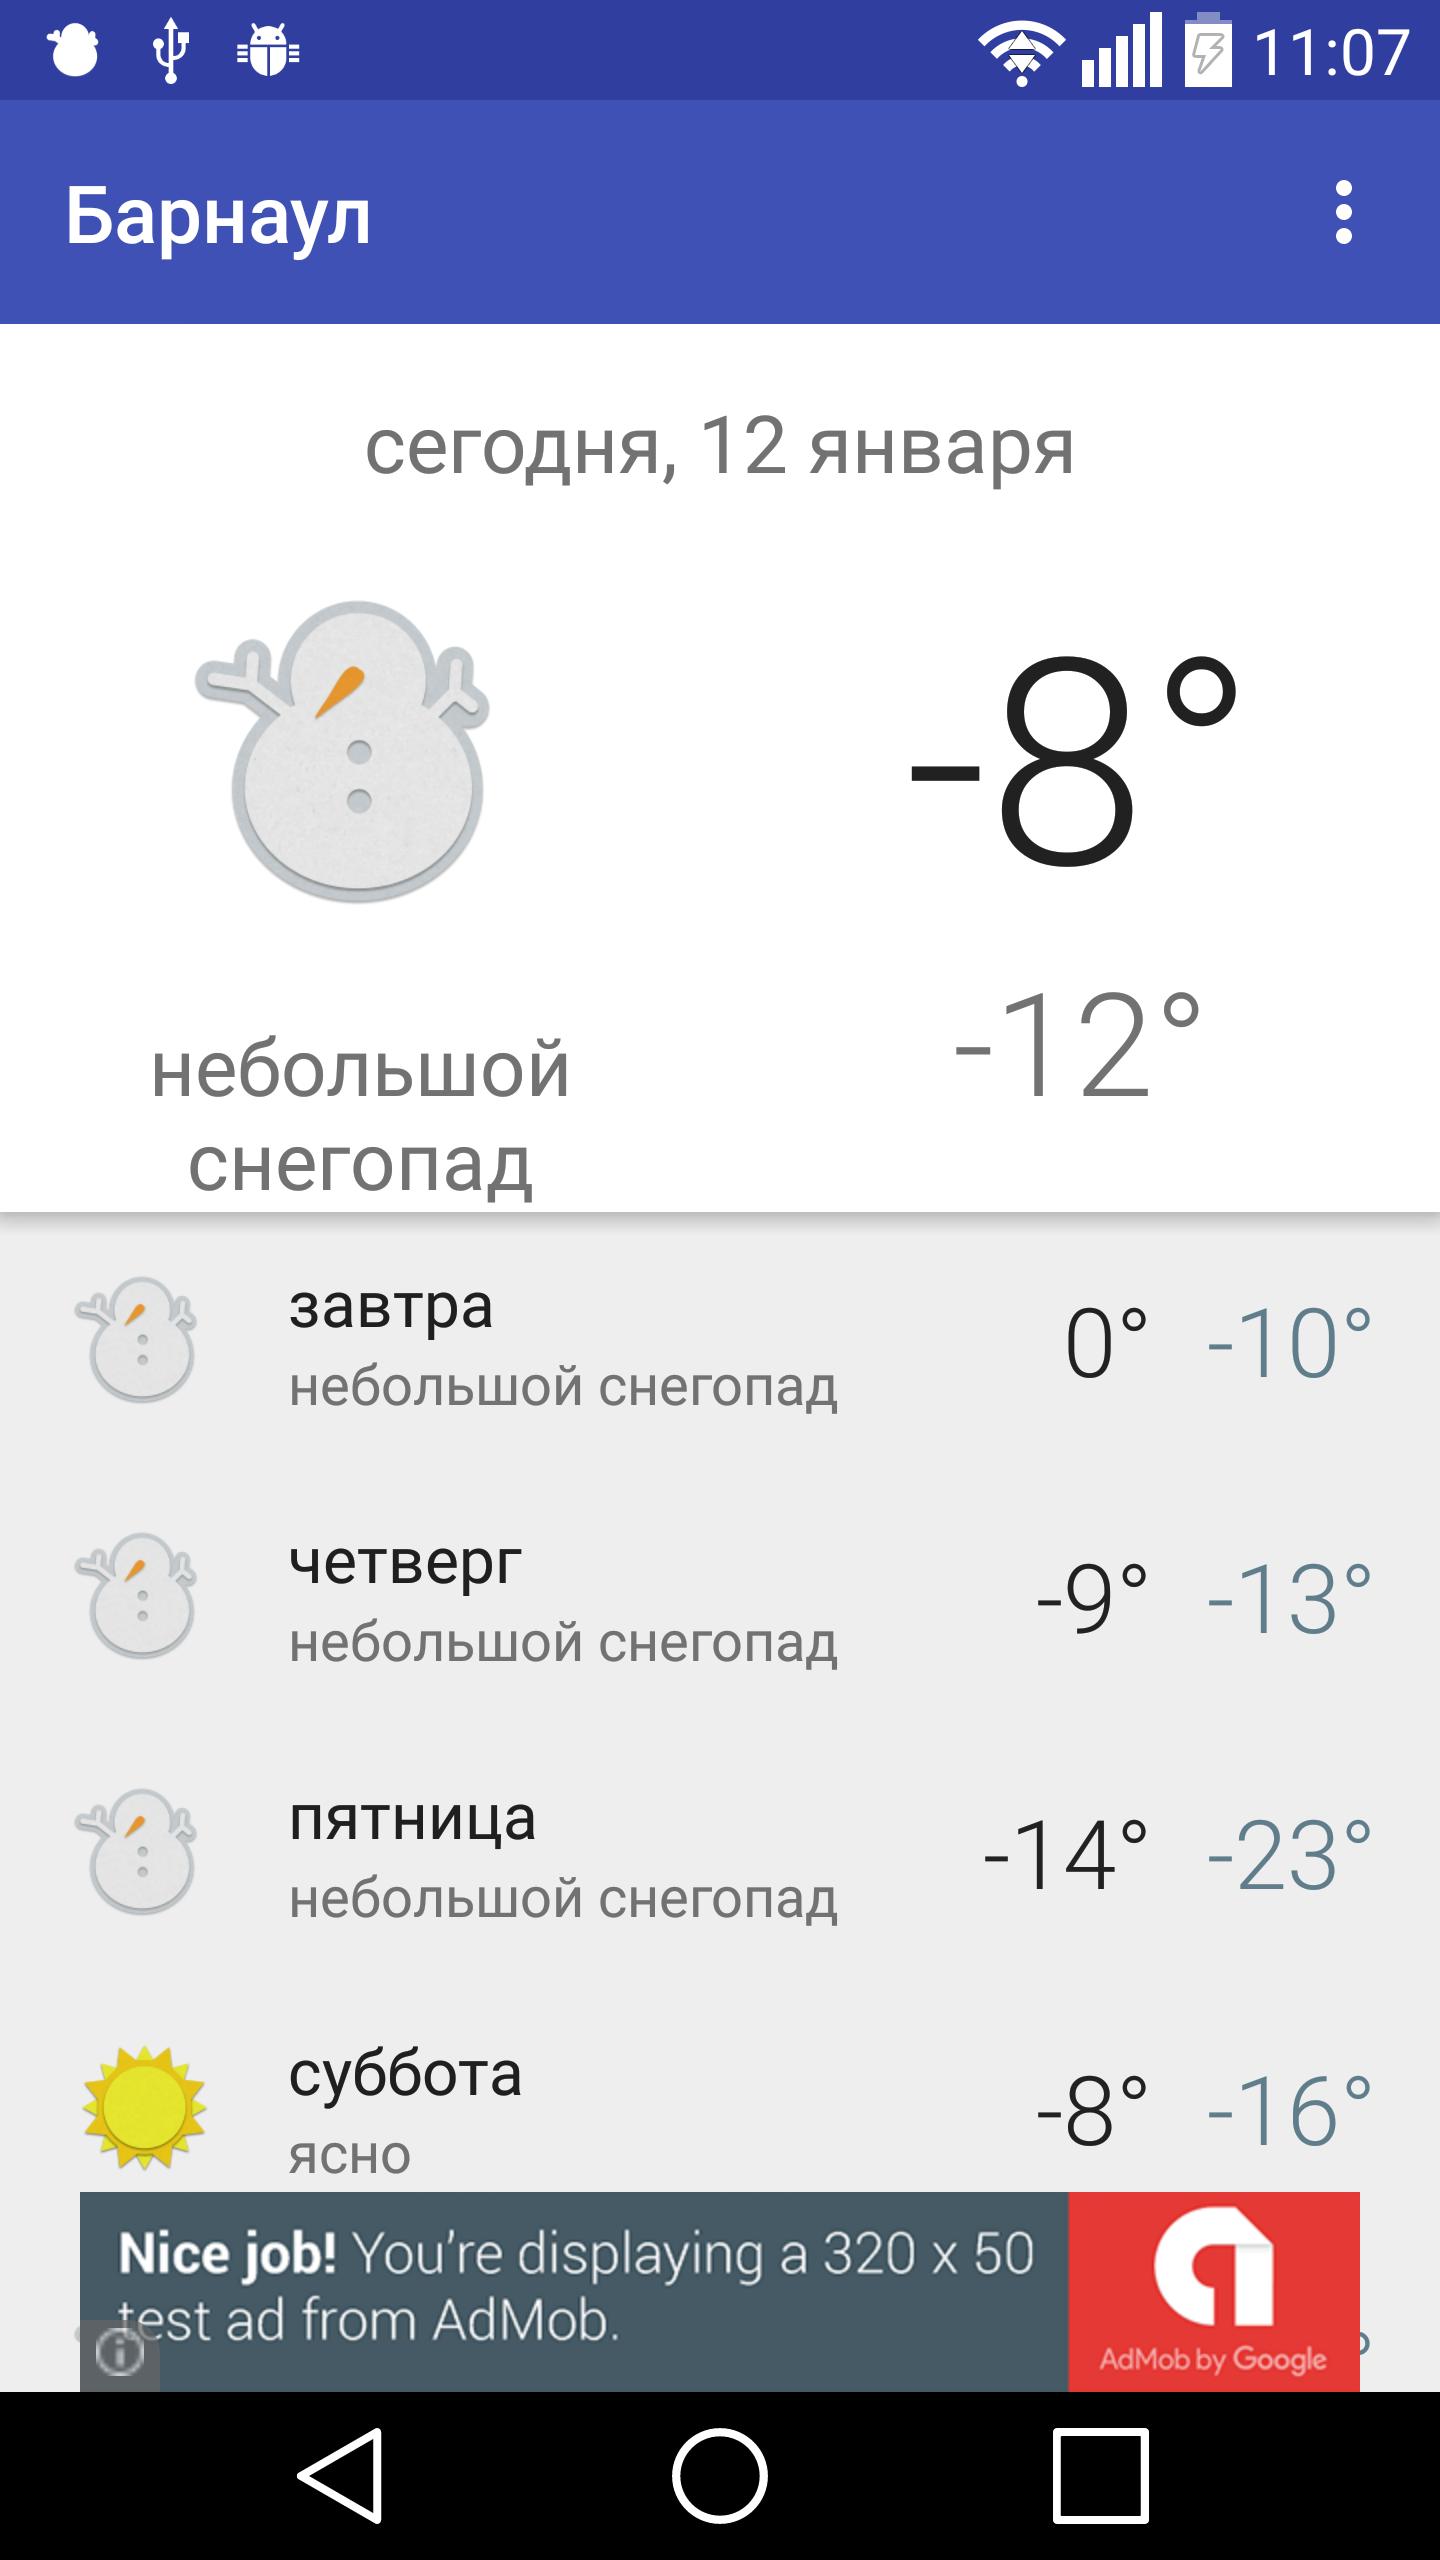 Погода в барнауле завтра по часам. Погода в Барнауле. Погода б. Погода в Барнауле сегодня. Погода на завтра в Барнауле.